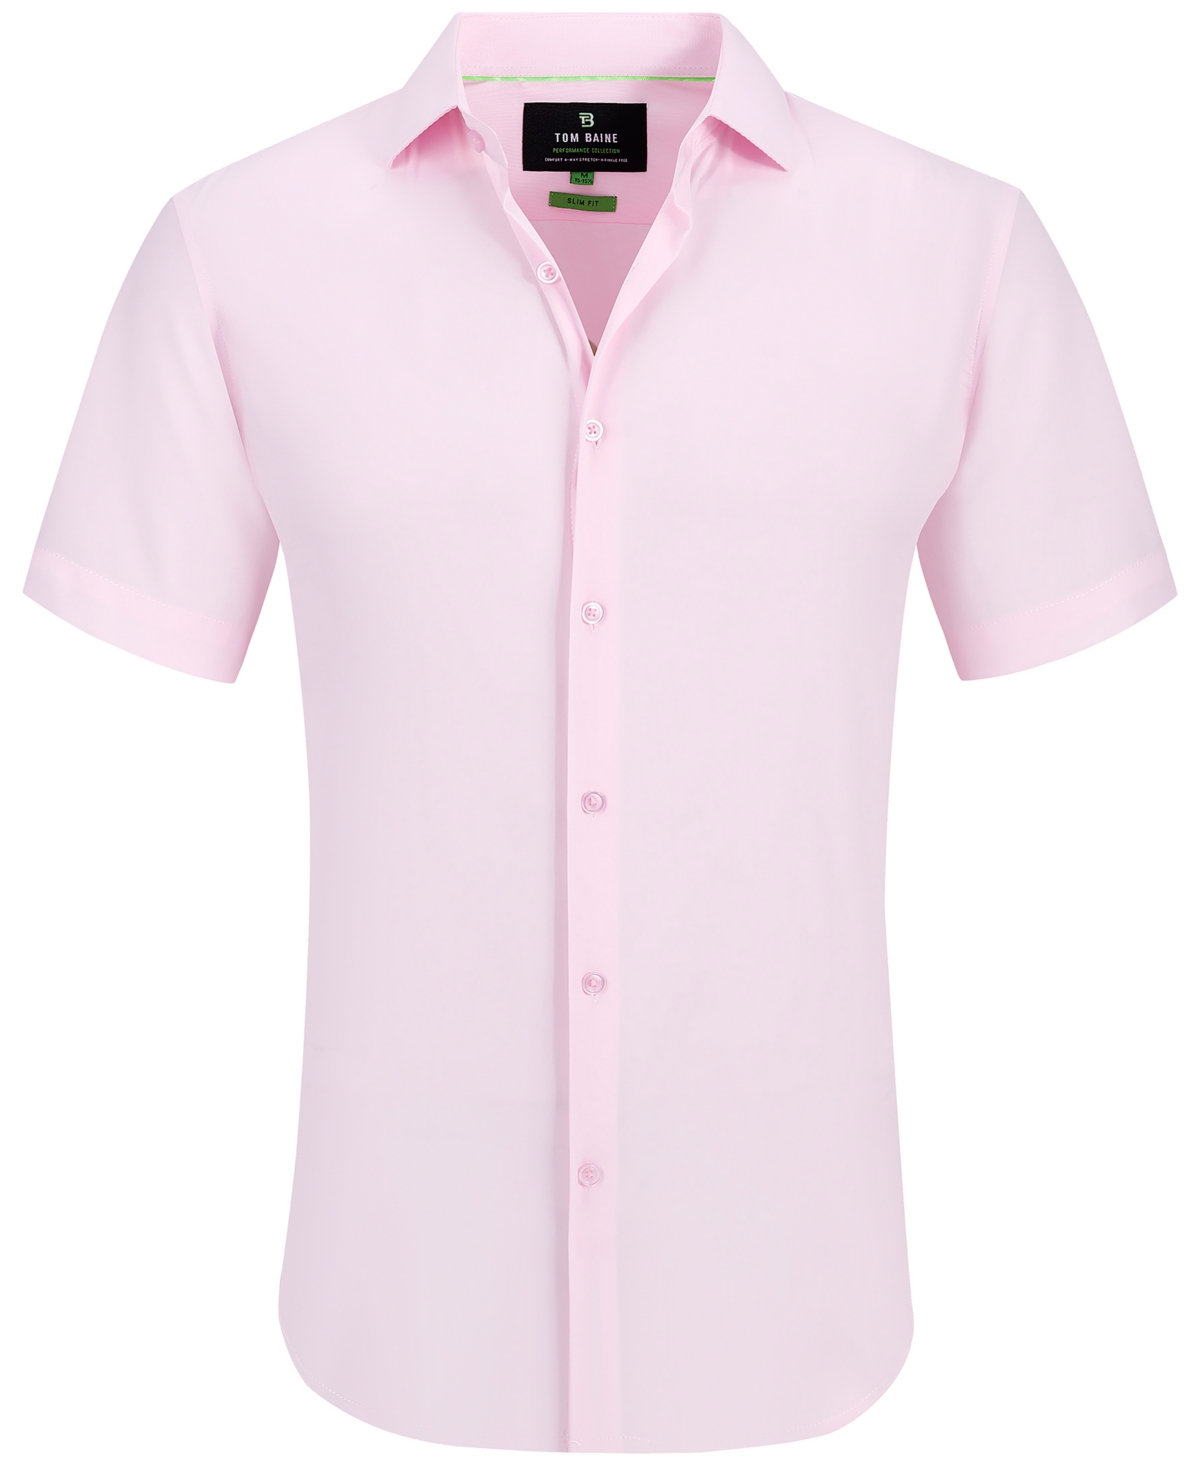 Tom Baine Men's Slim Fit Short Sleeve Performance Button Down Dress Shirt In Light Pink